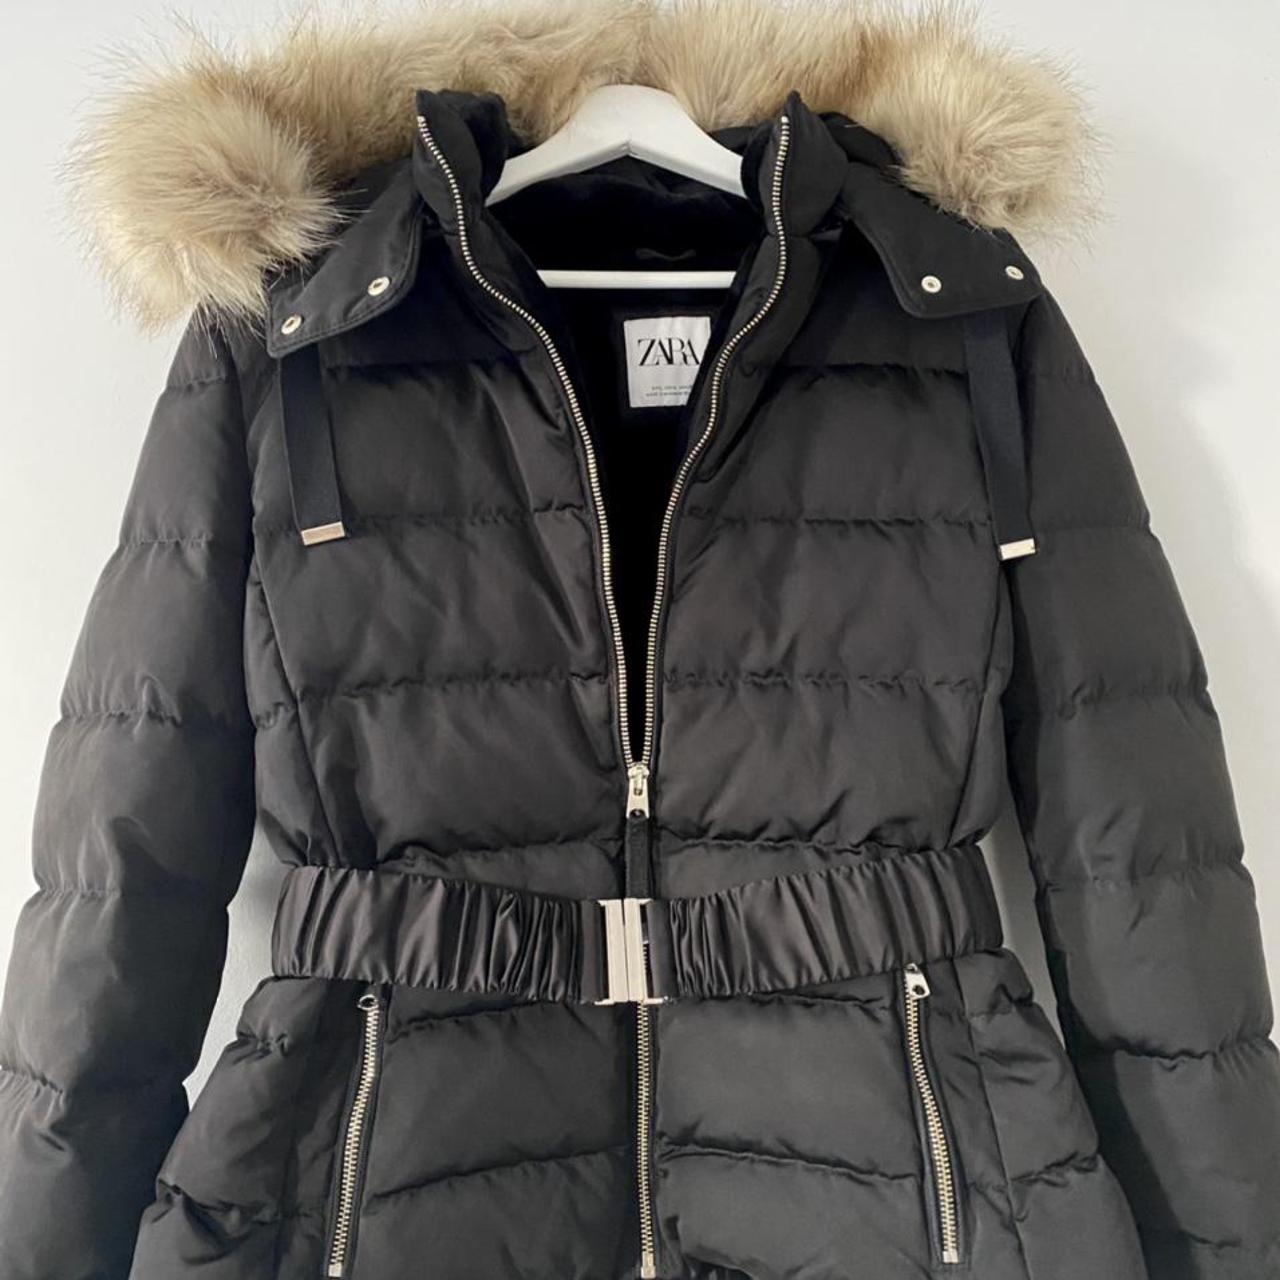 Zara Black Puffer With Fur Hood Perfect Thick-Down... - Depop